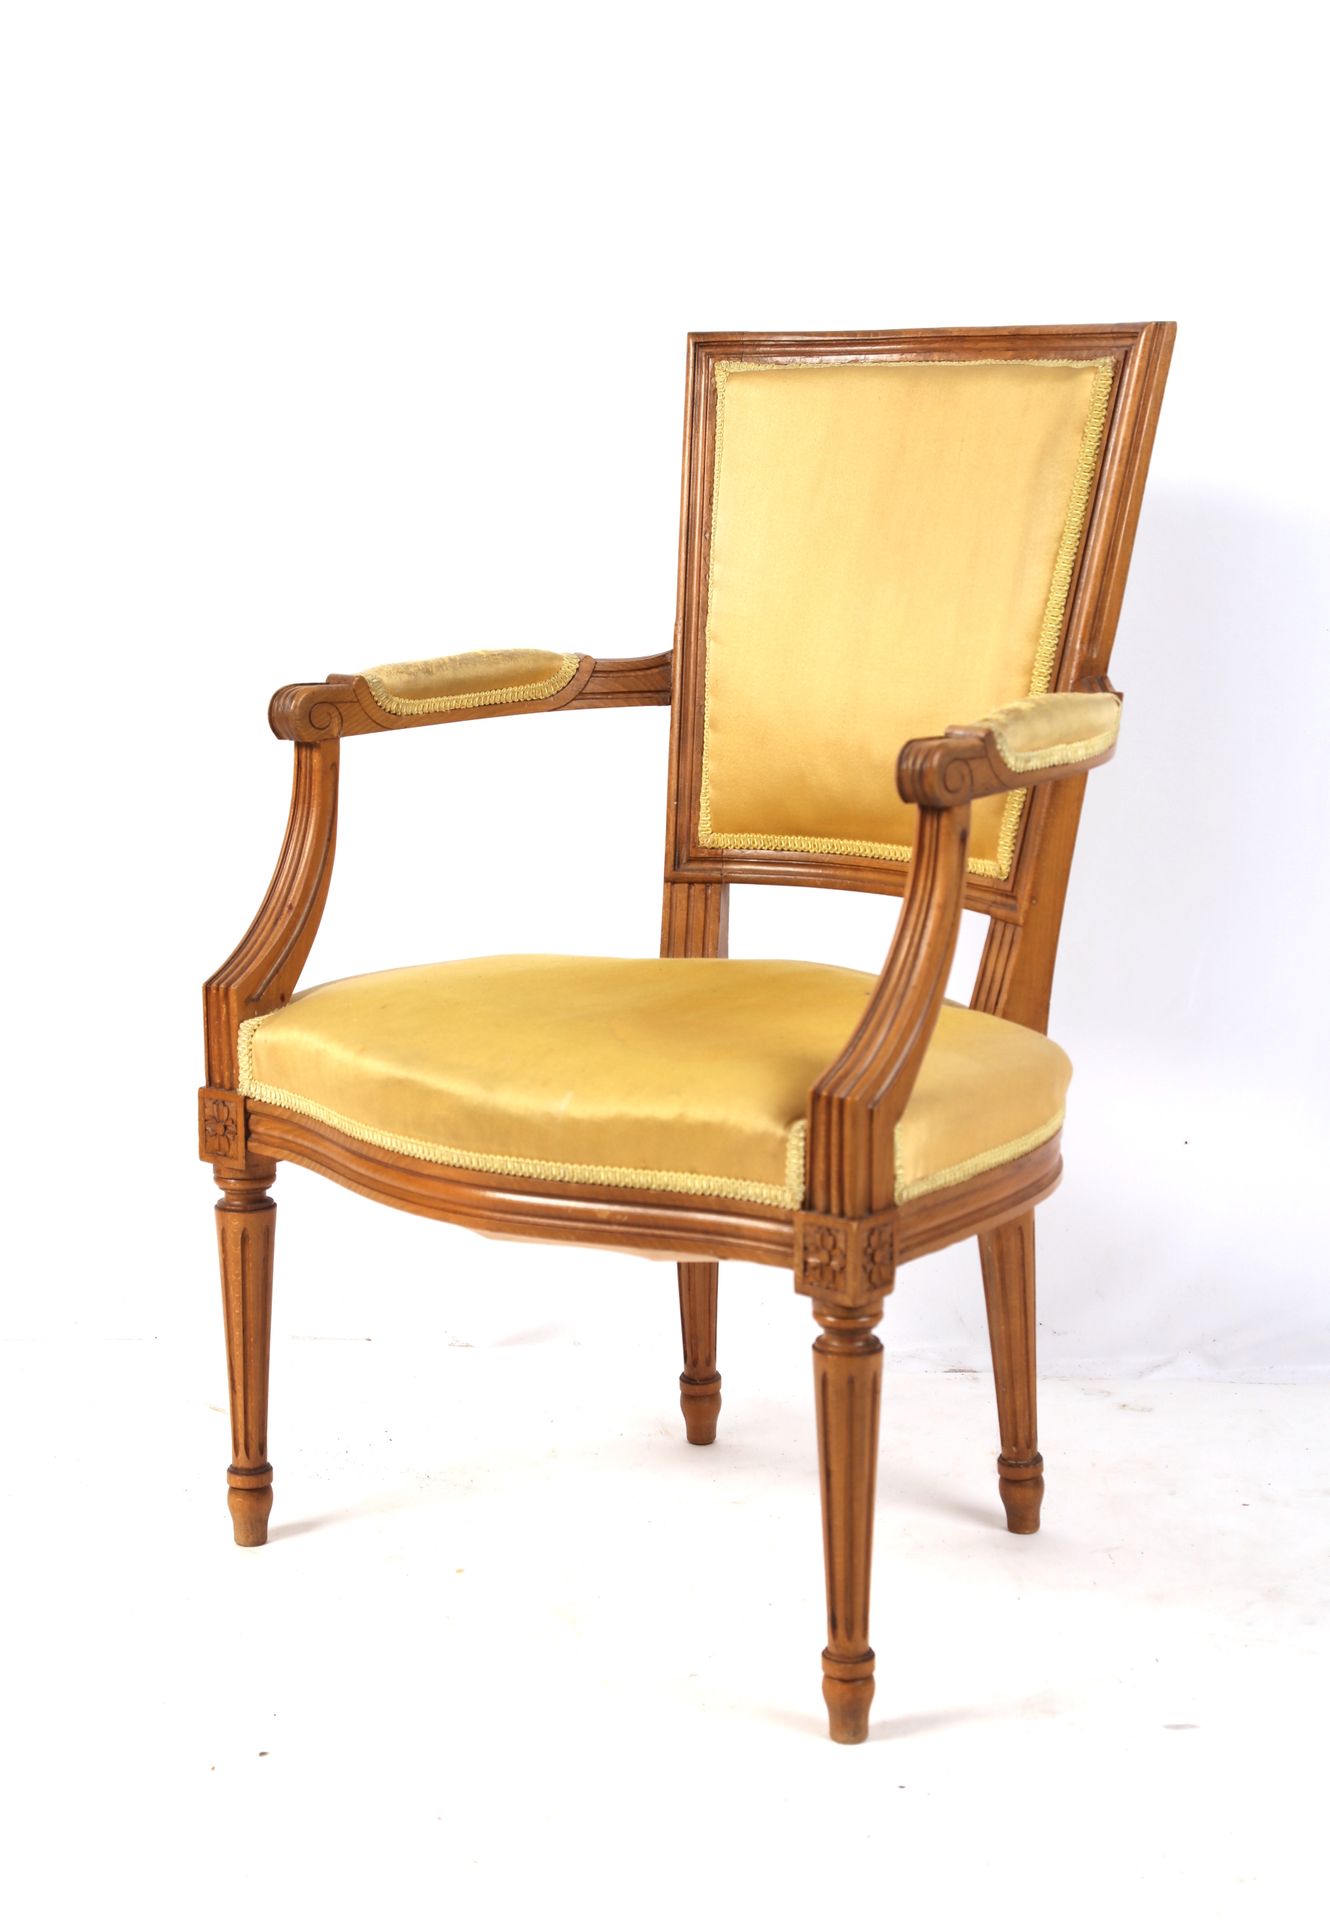 Null Sessel aus Naturholz mit Stoffbezug, im Stil Louis XVI.